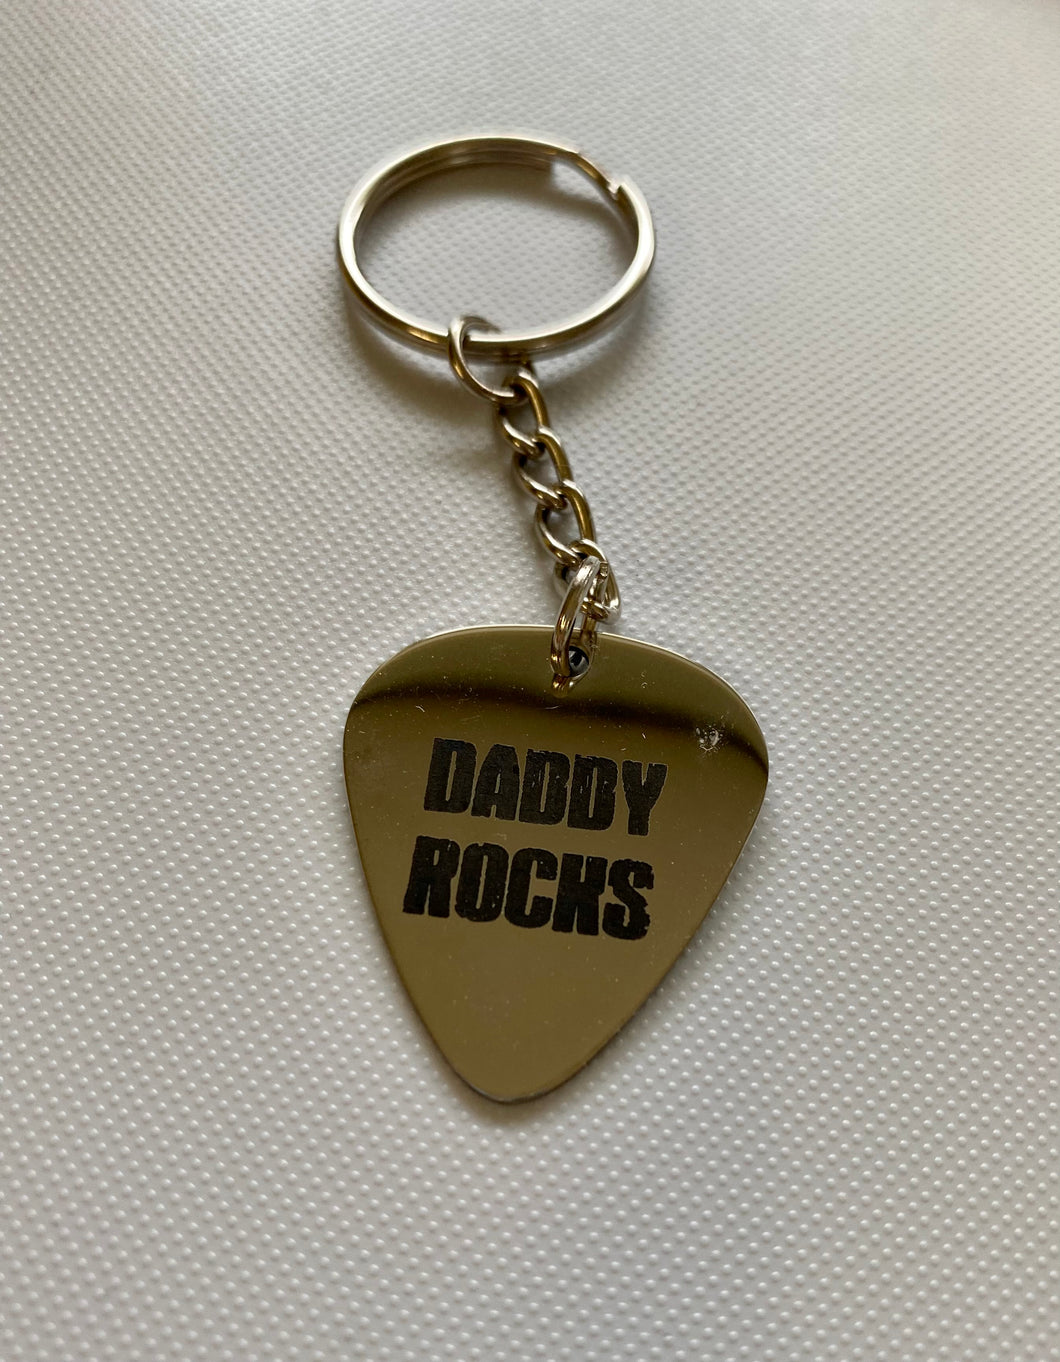 Daddy rocks key chain